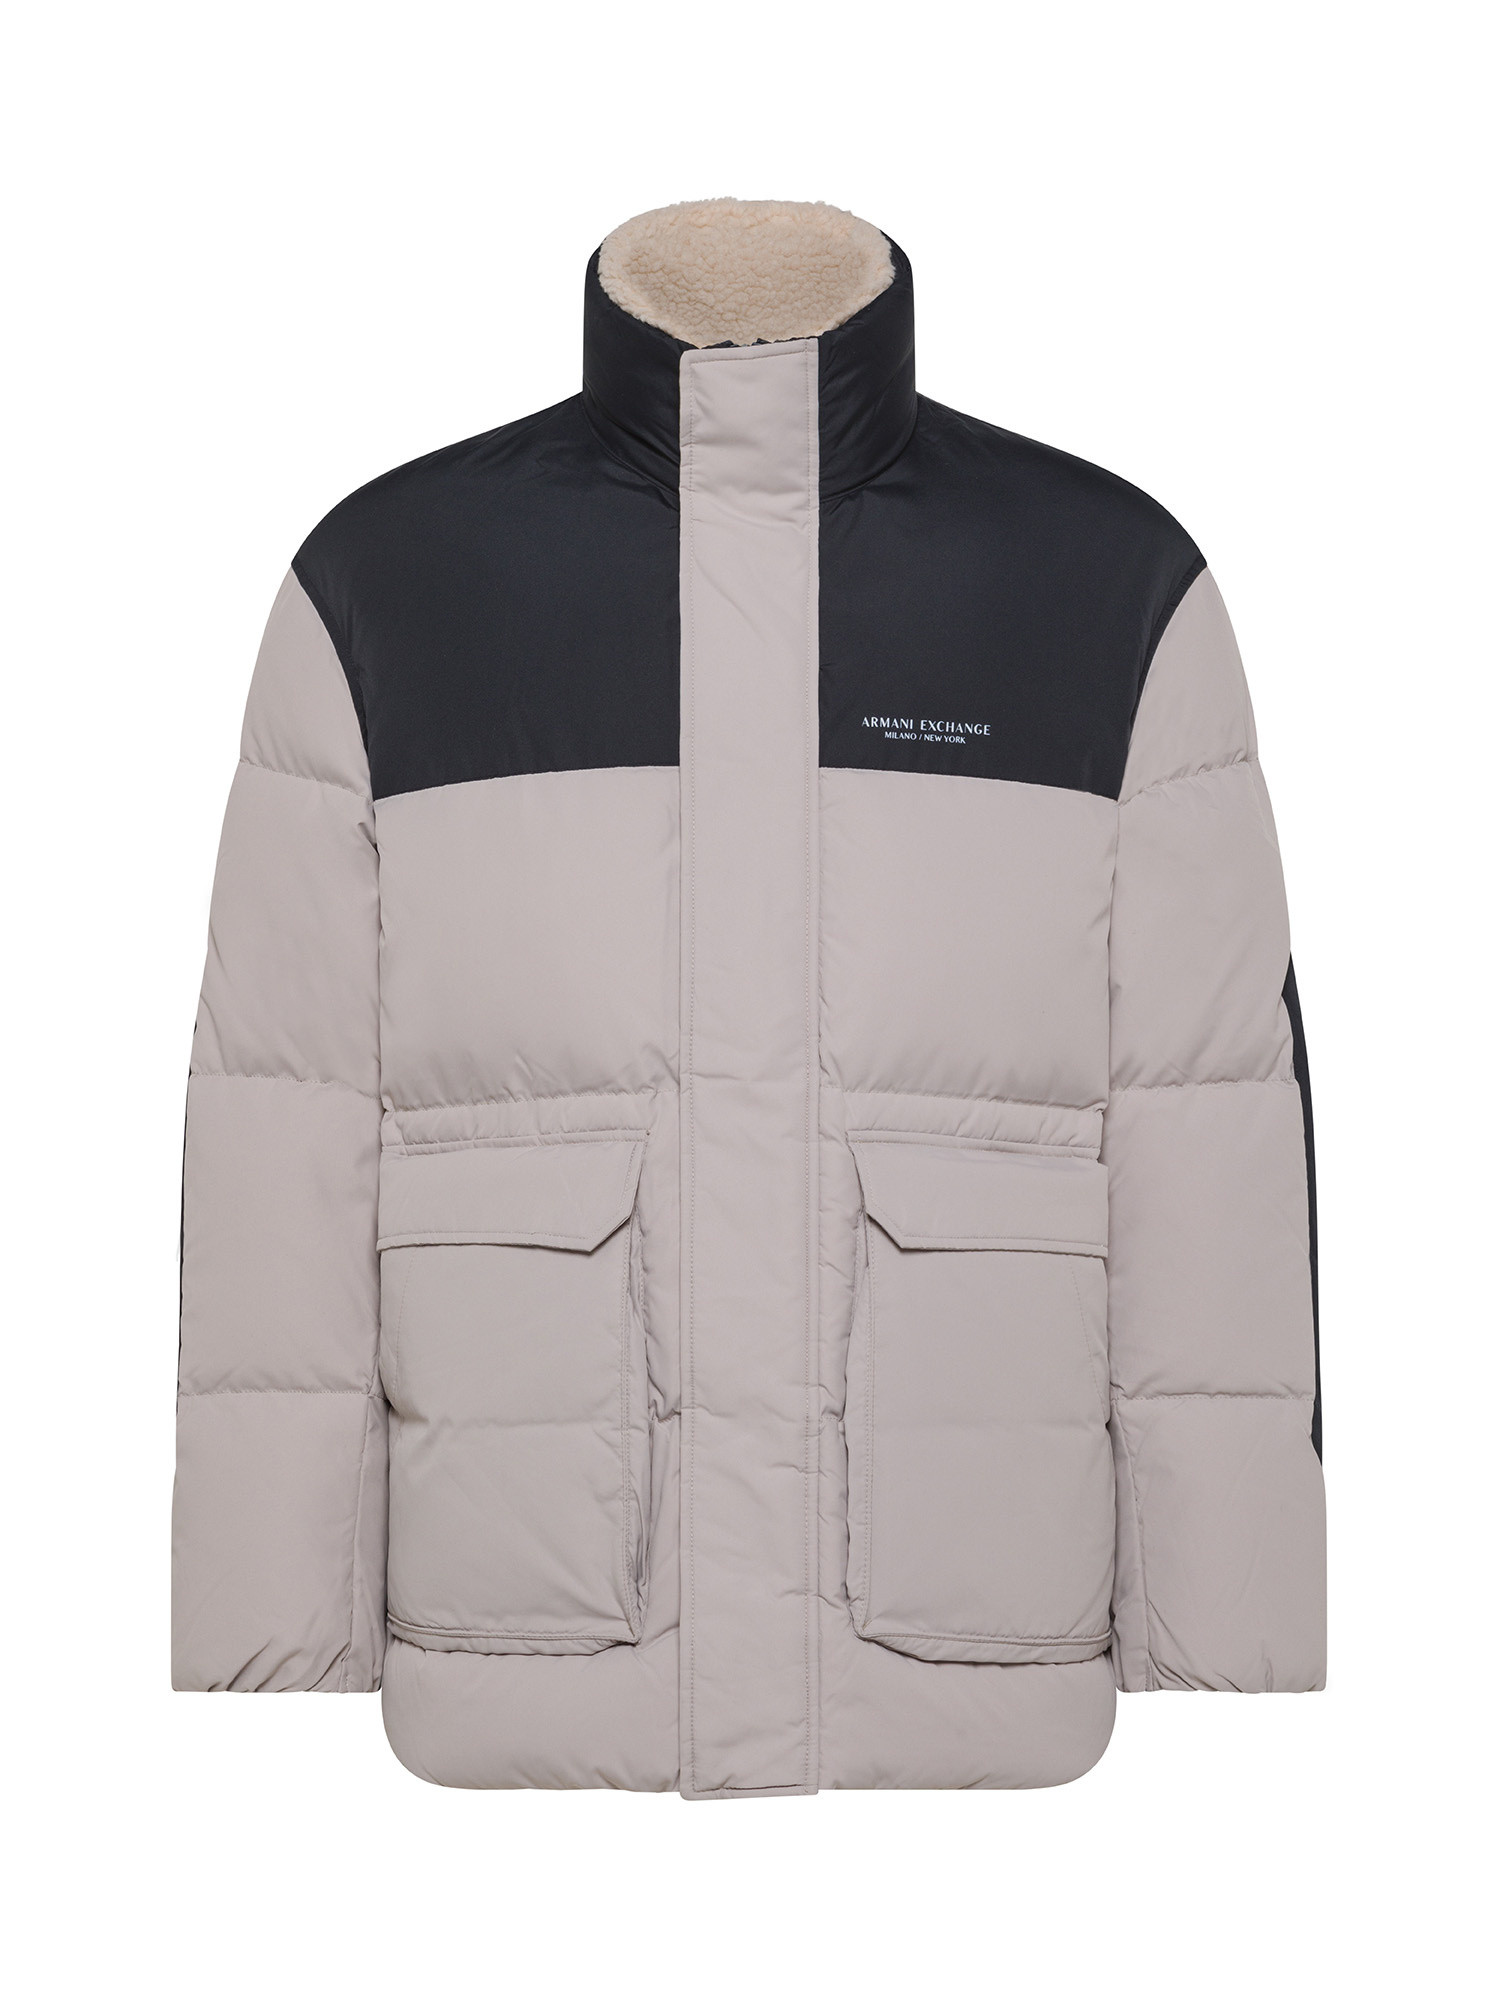 Armani Exchange - High neck down jacket with logo, Beige, large image number 0